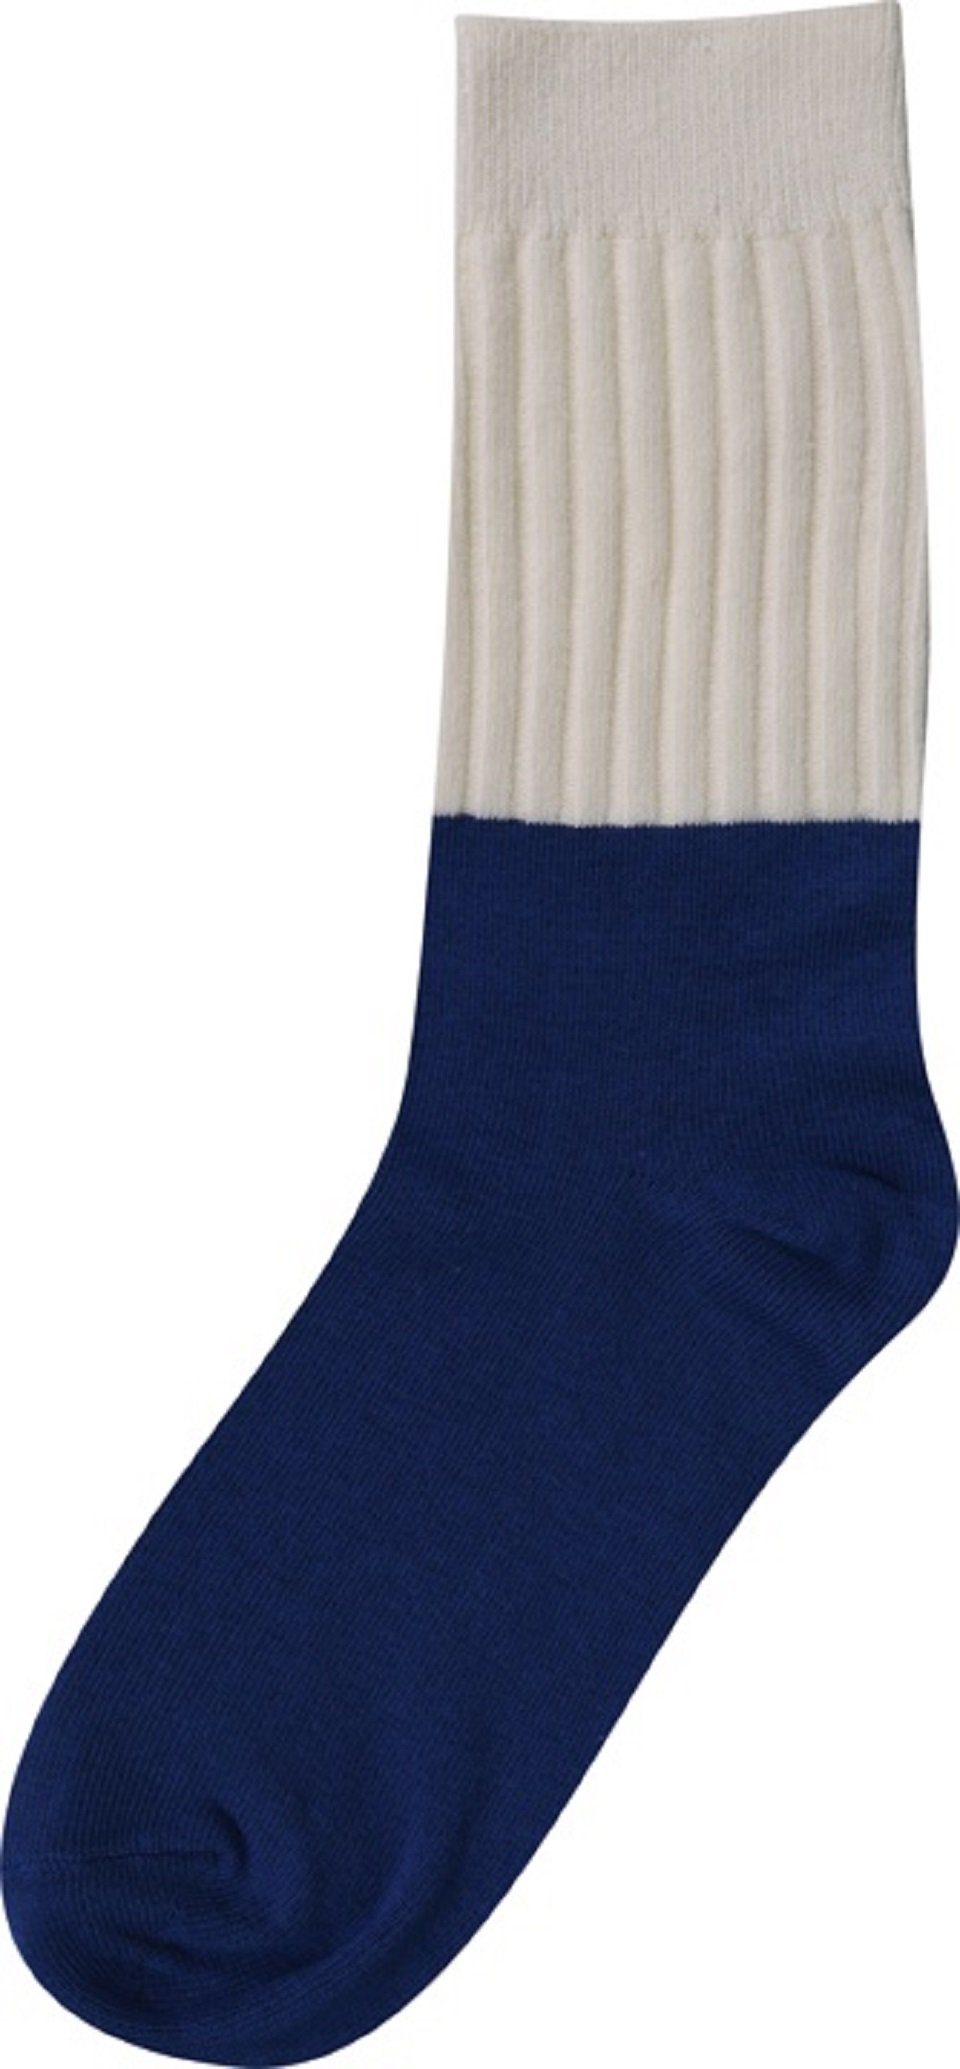 York New blau Socken Unisex Socken 2x Capelli